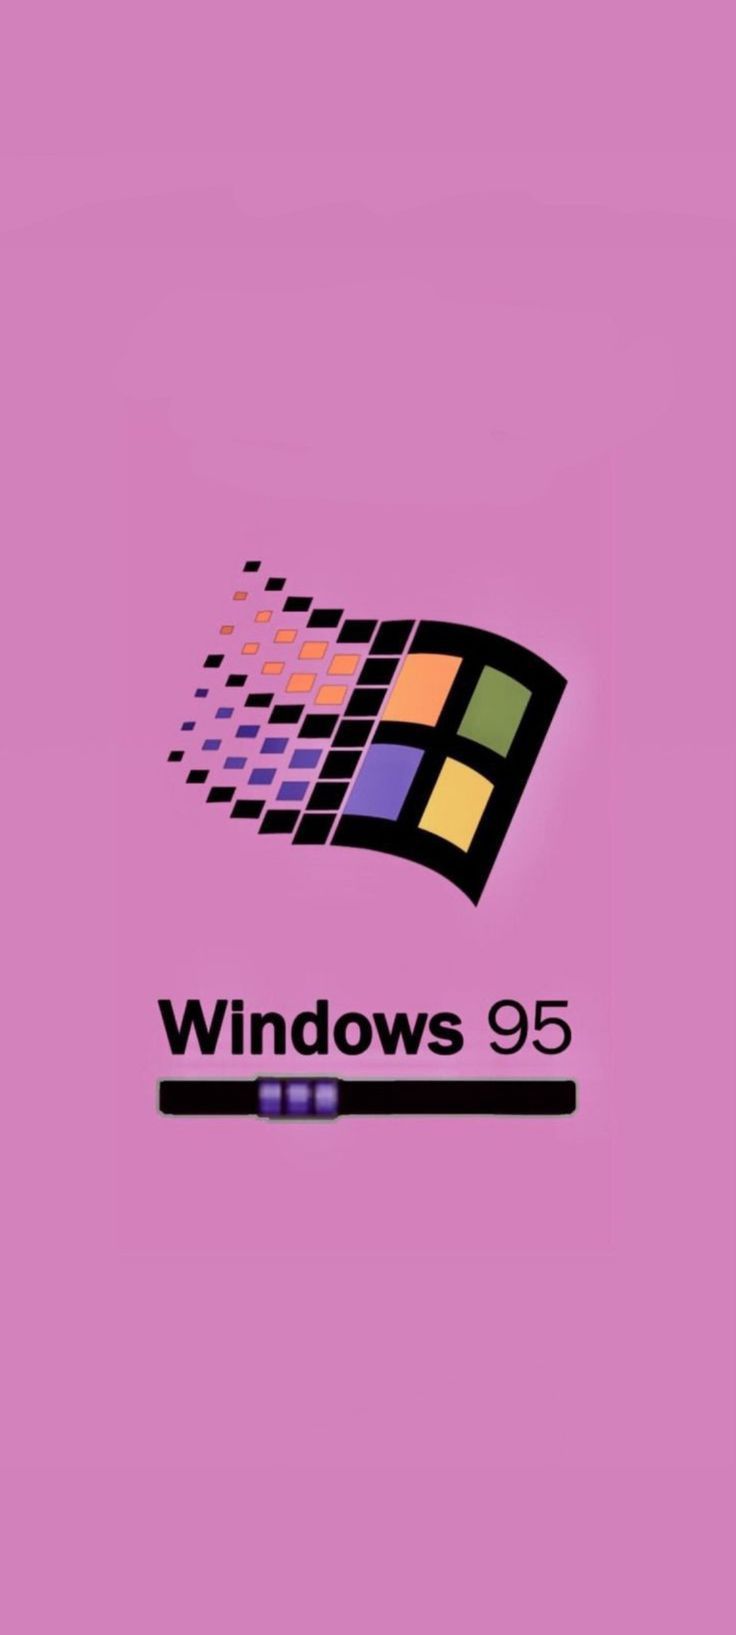 Windows 95 Wallpaper For Lock Screen Samsung A S Note Pink. Windows Wallpaper, Pink